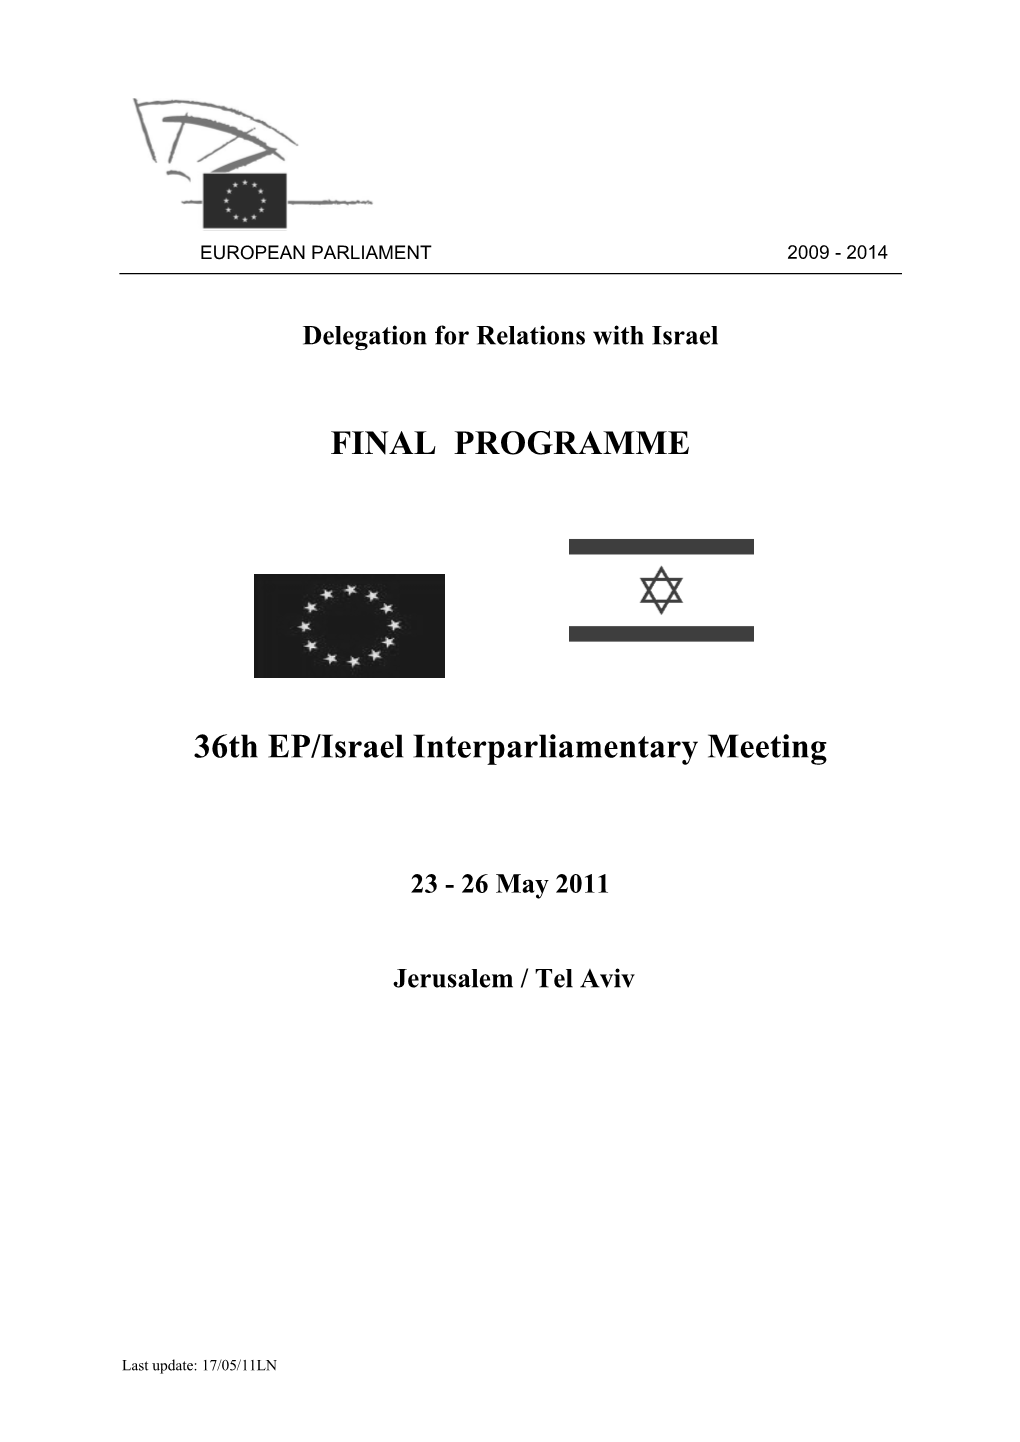 FINAL PROGRAMME 36Th EP/Israel Interparliamentary Meeting